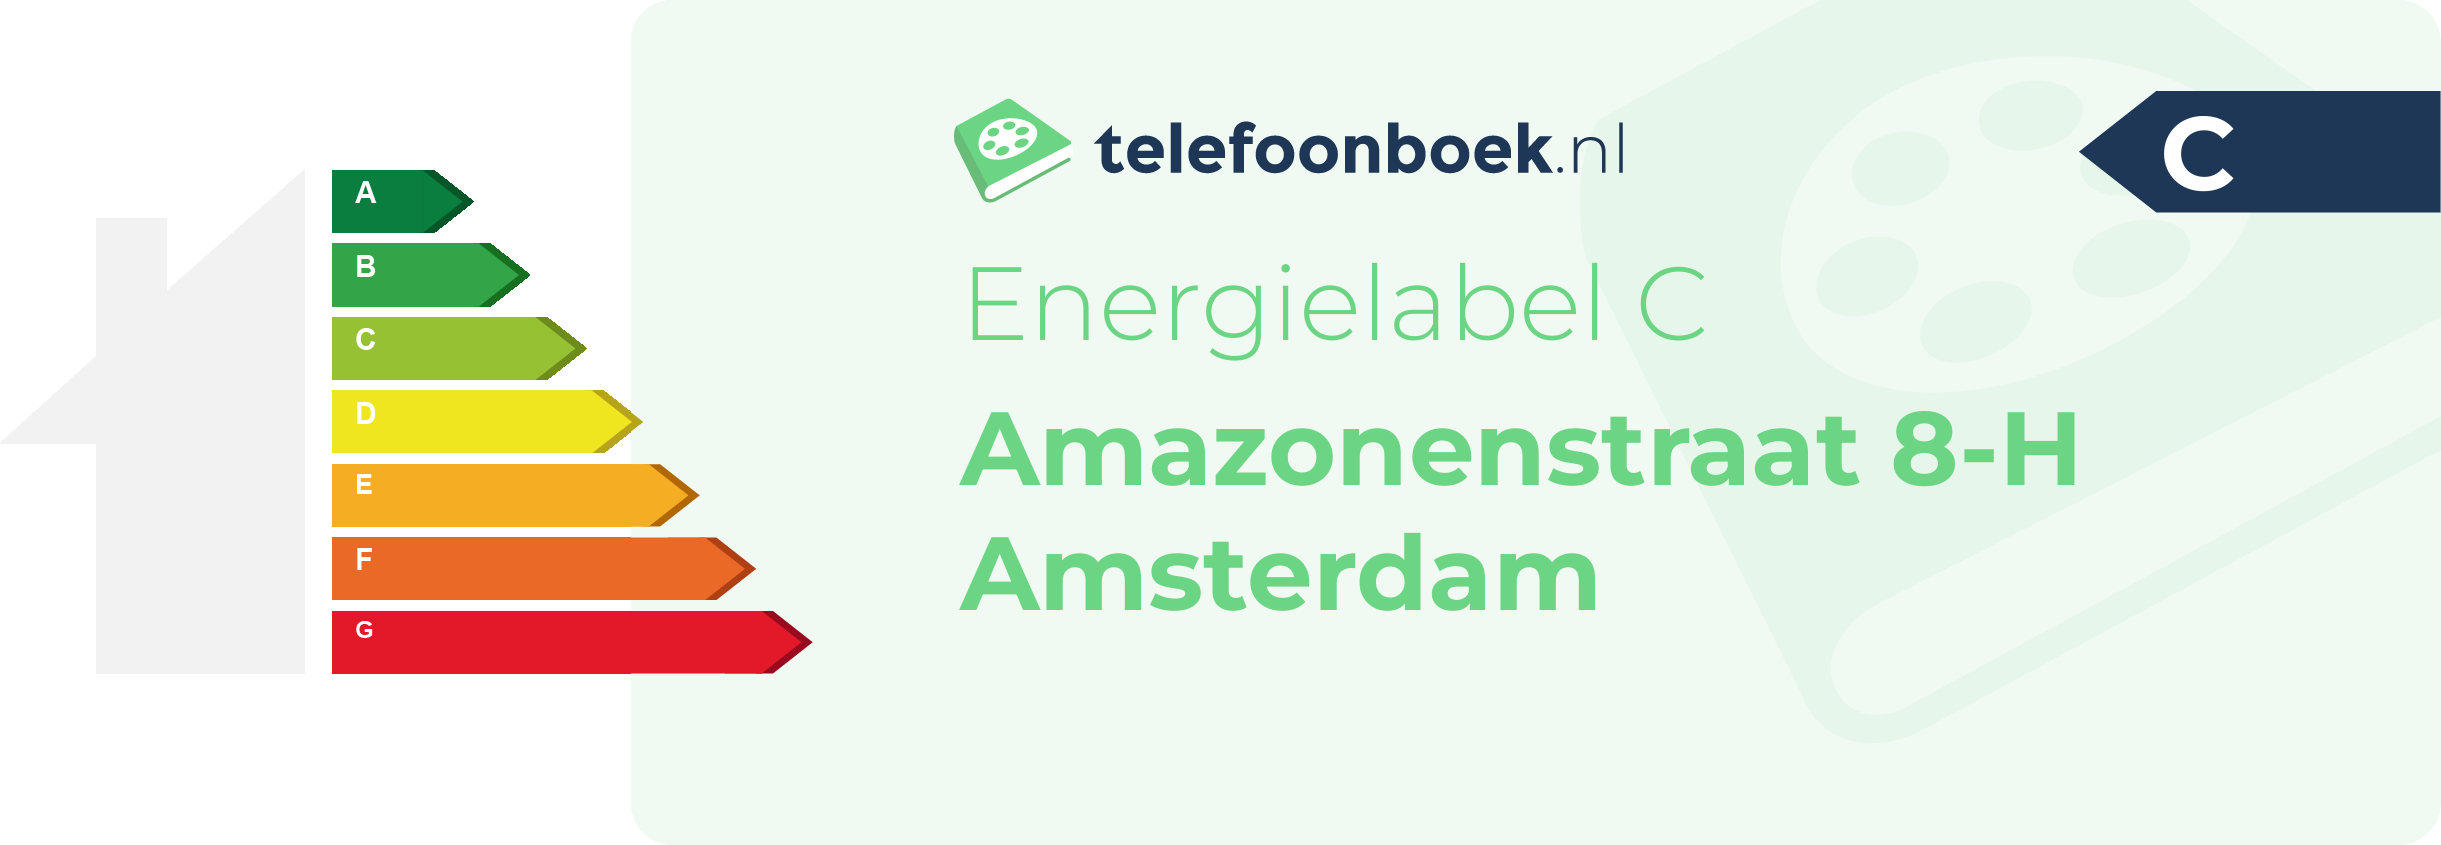 Energielabel Amazonenstraat 8-H Amsterdam